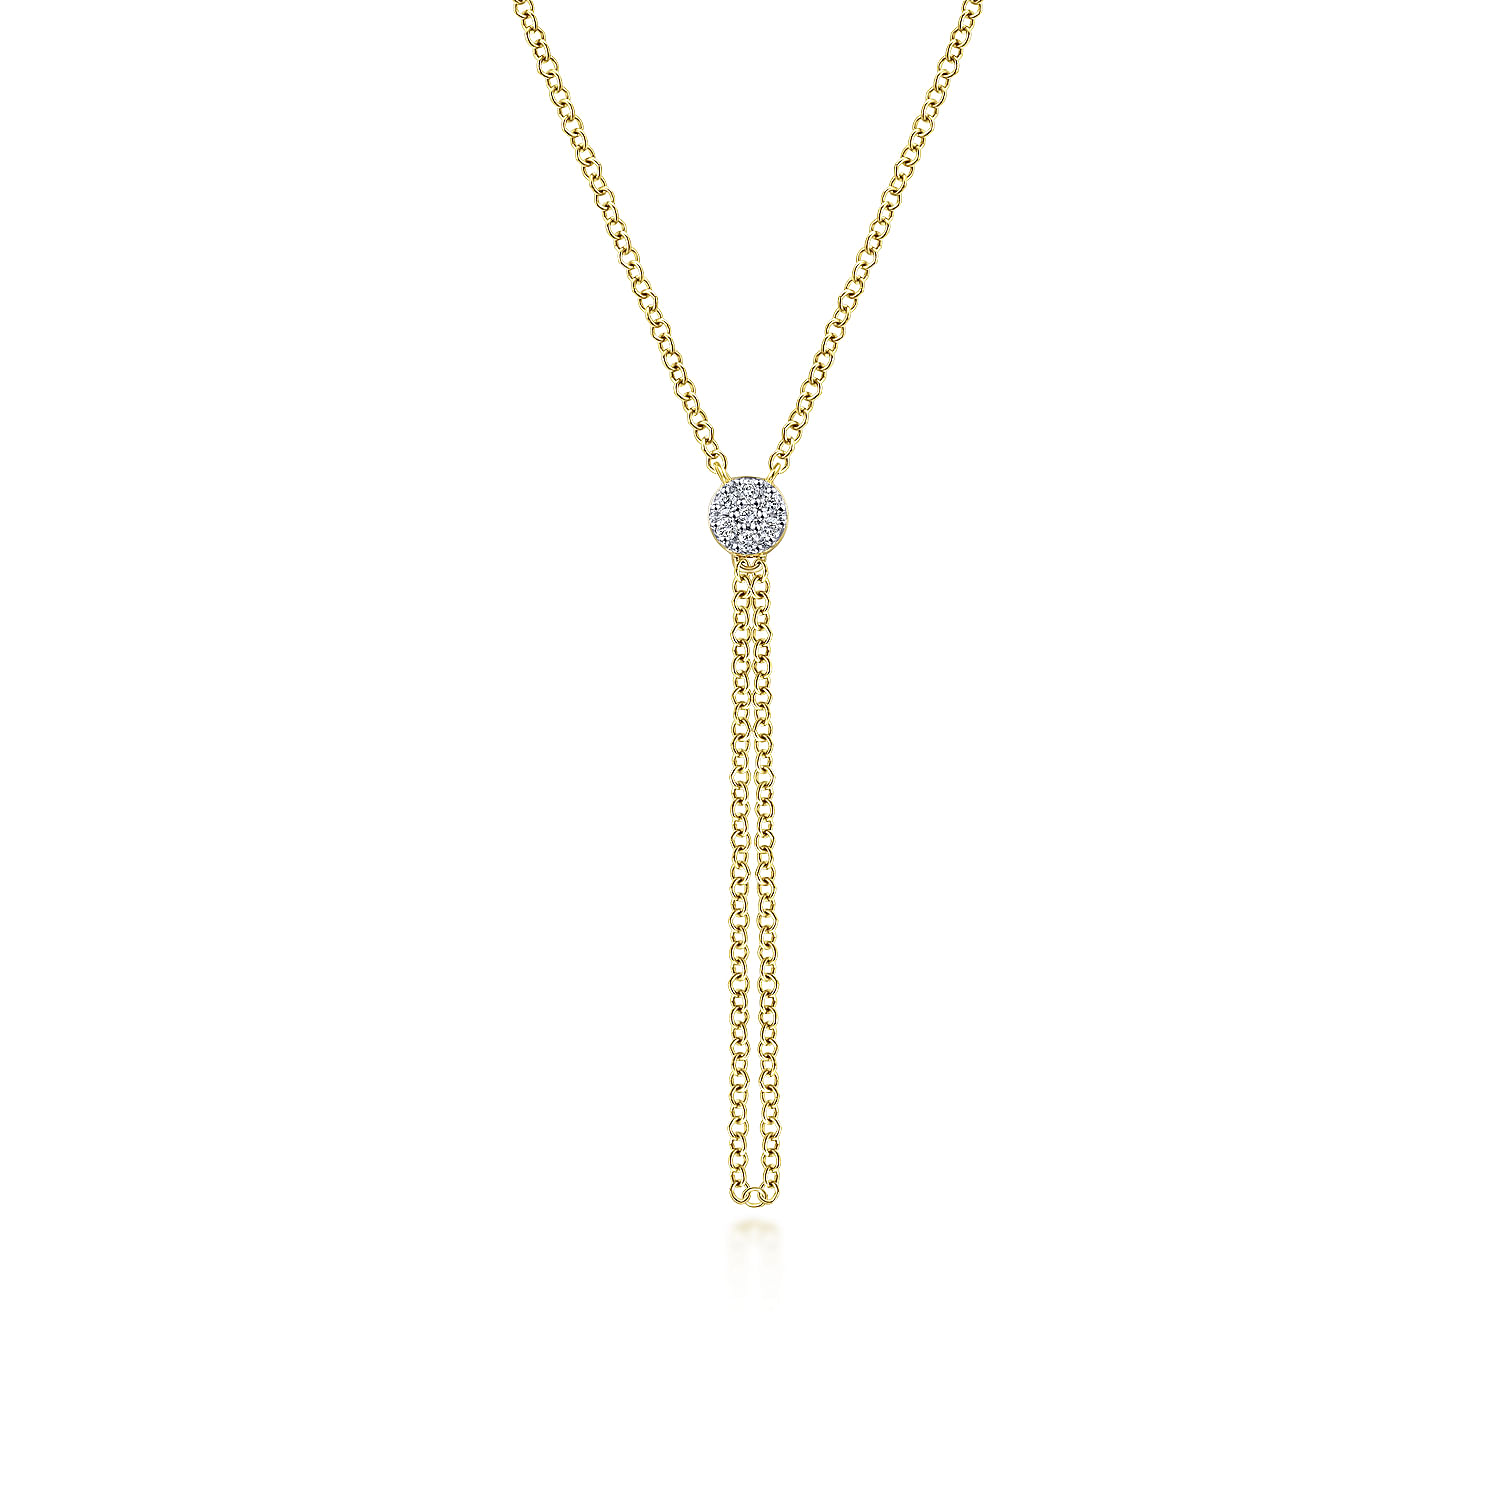 14K Yellow Gold Diamond Pavé Circle Pendant Necklace with Chain Drop